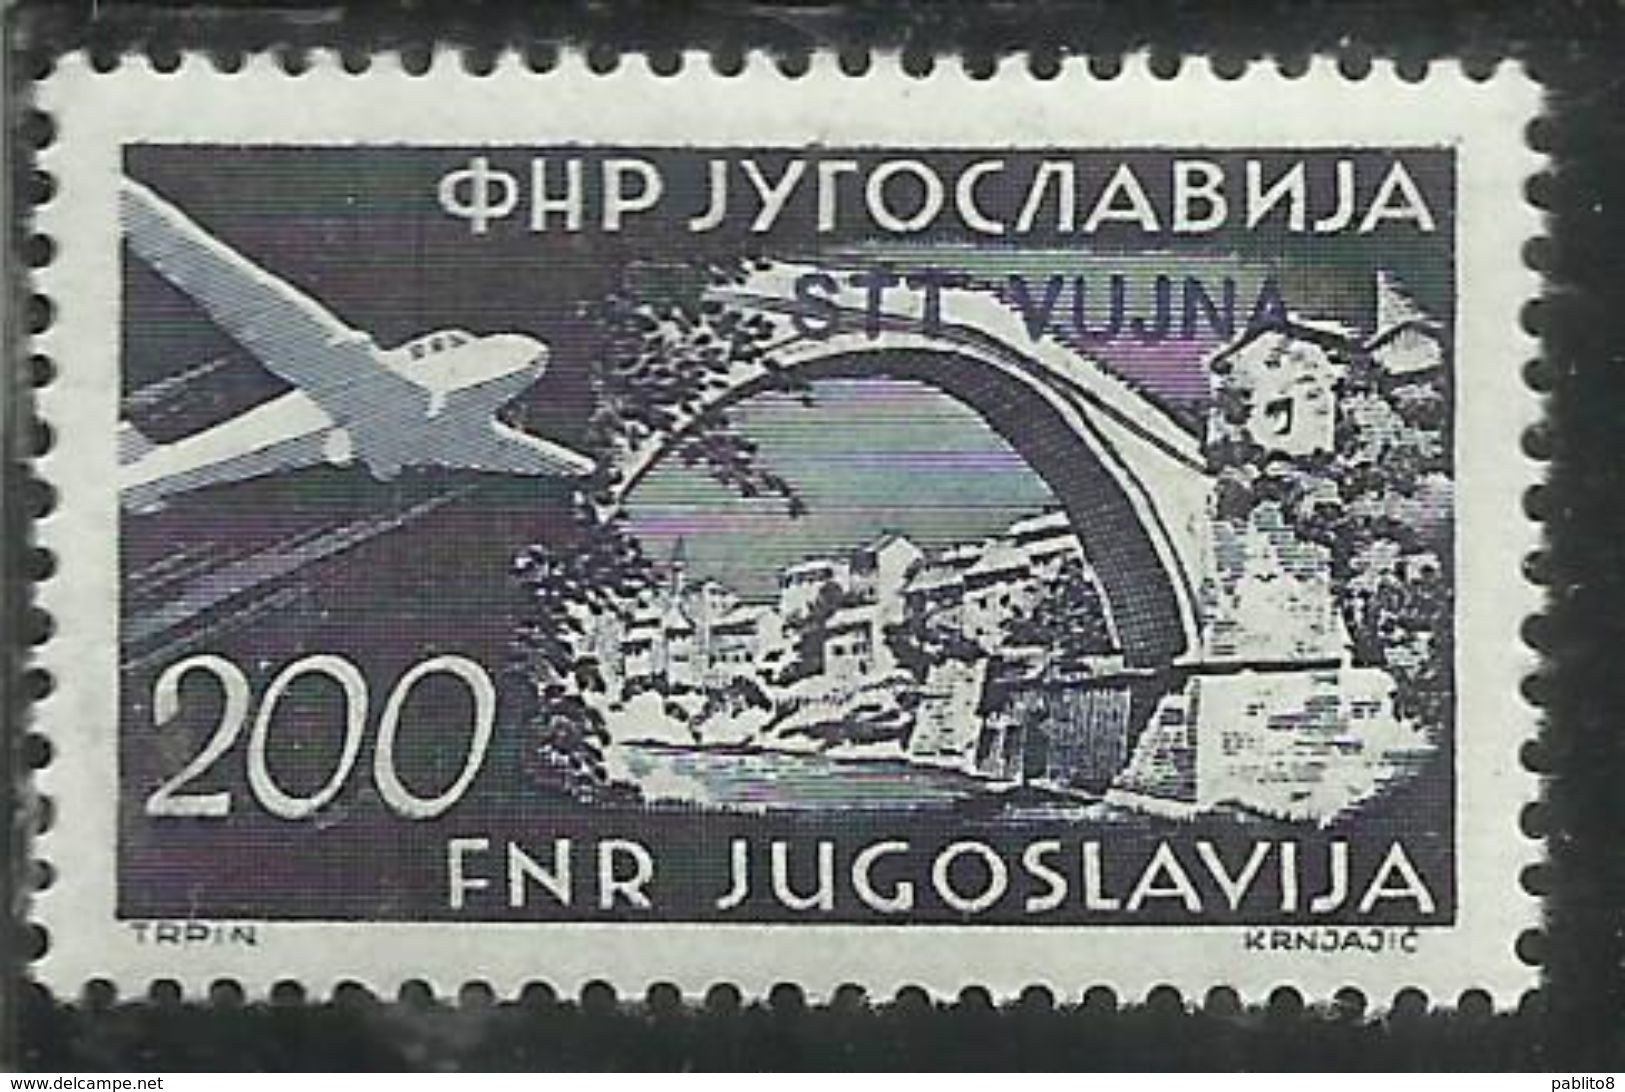 TRIESTE B 1954 POSTA AEREA AIR MAIL ESPERANTO CONGRESS FRANCOBOLLI DI YUGOSLAVIA SOPRASTAMPATO JUGOSLAVIA 200d MNH - Luftpost